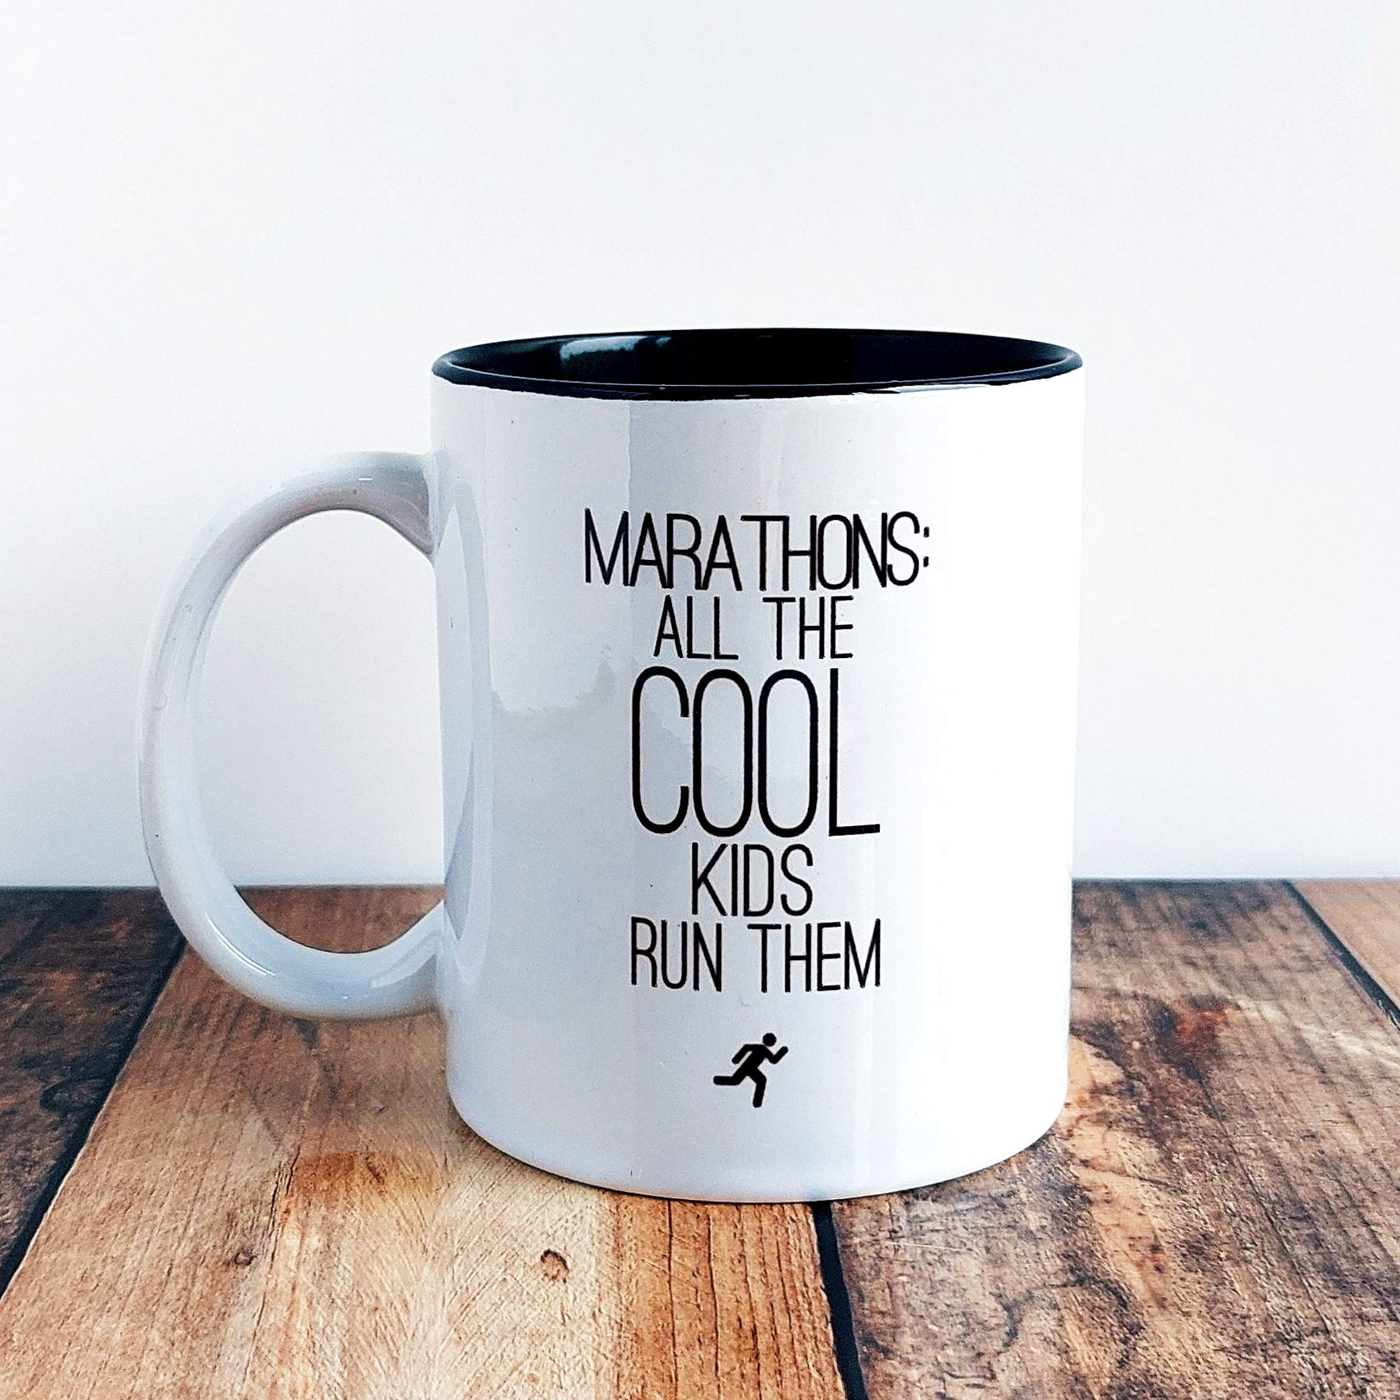 Marathons: All the Cool Kids Run Them - Mug-Worry Less Design-Marathon,Marathon-Gift,Mug